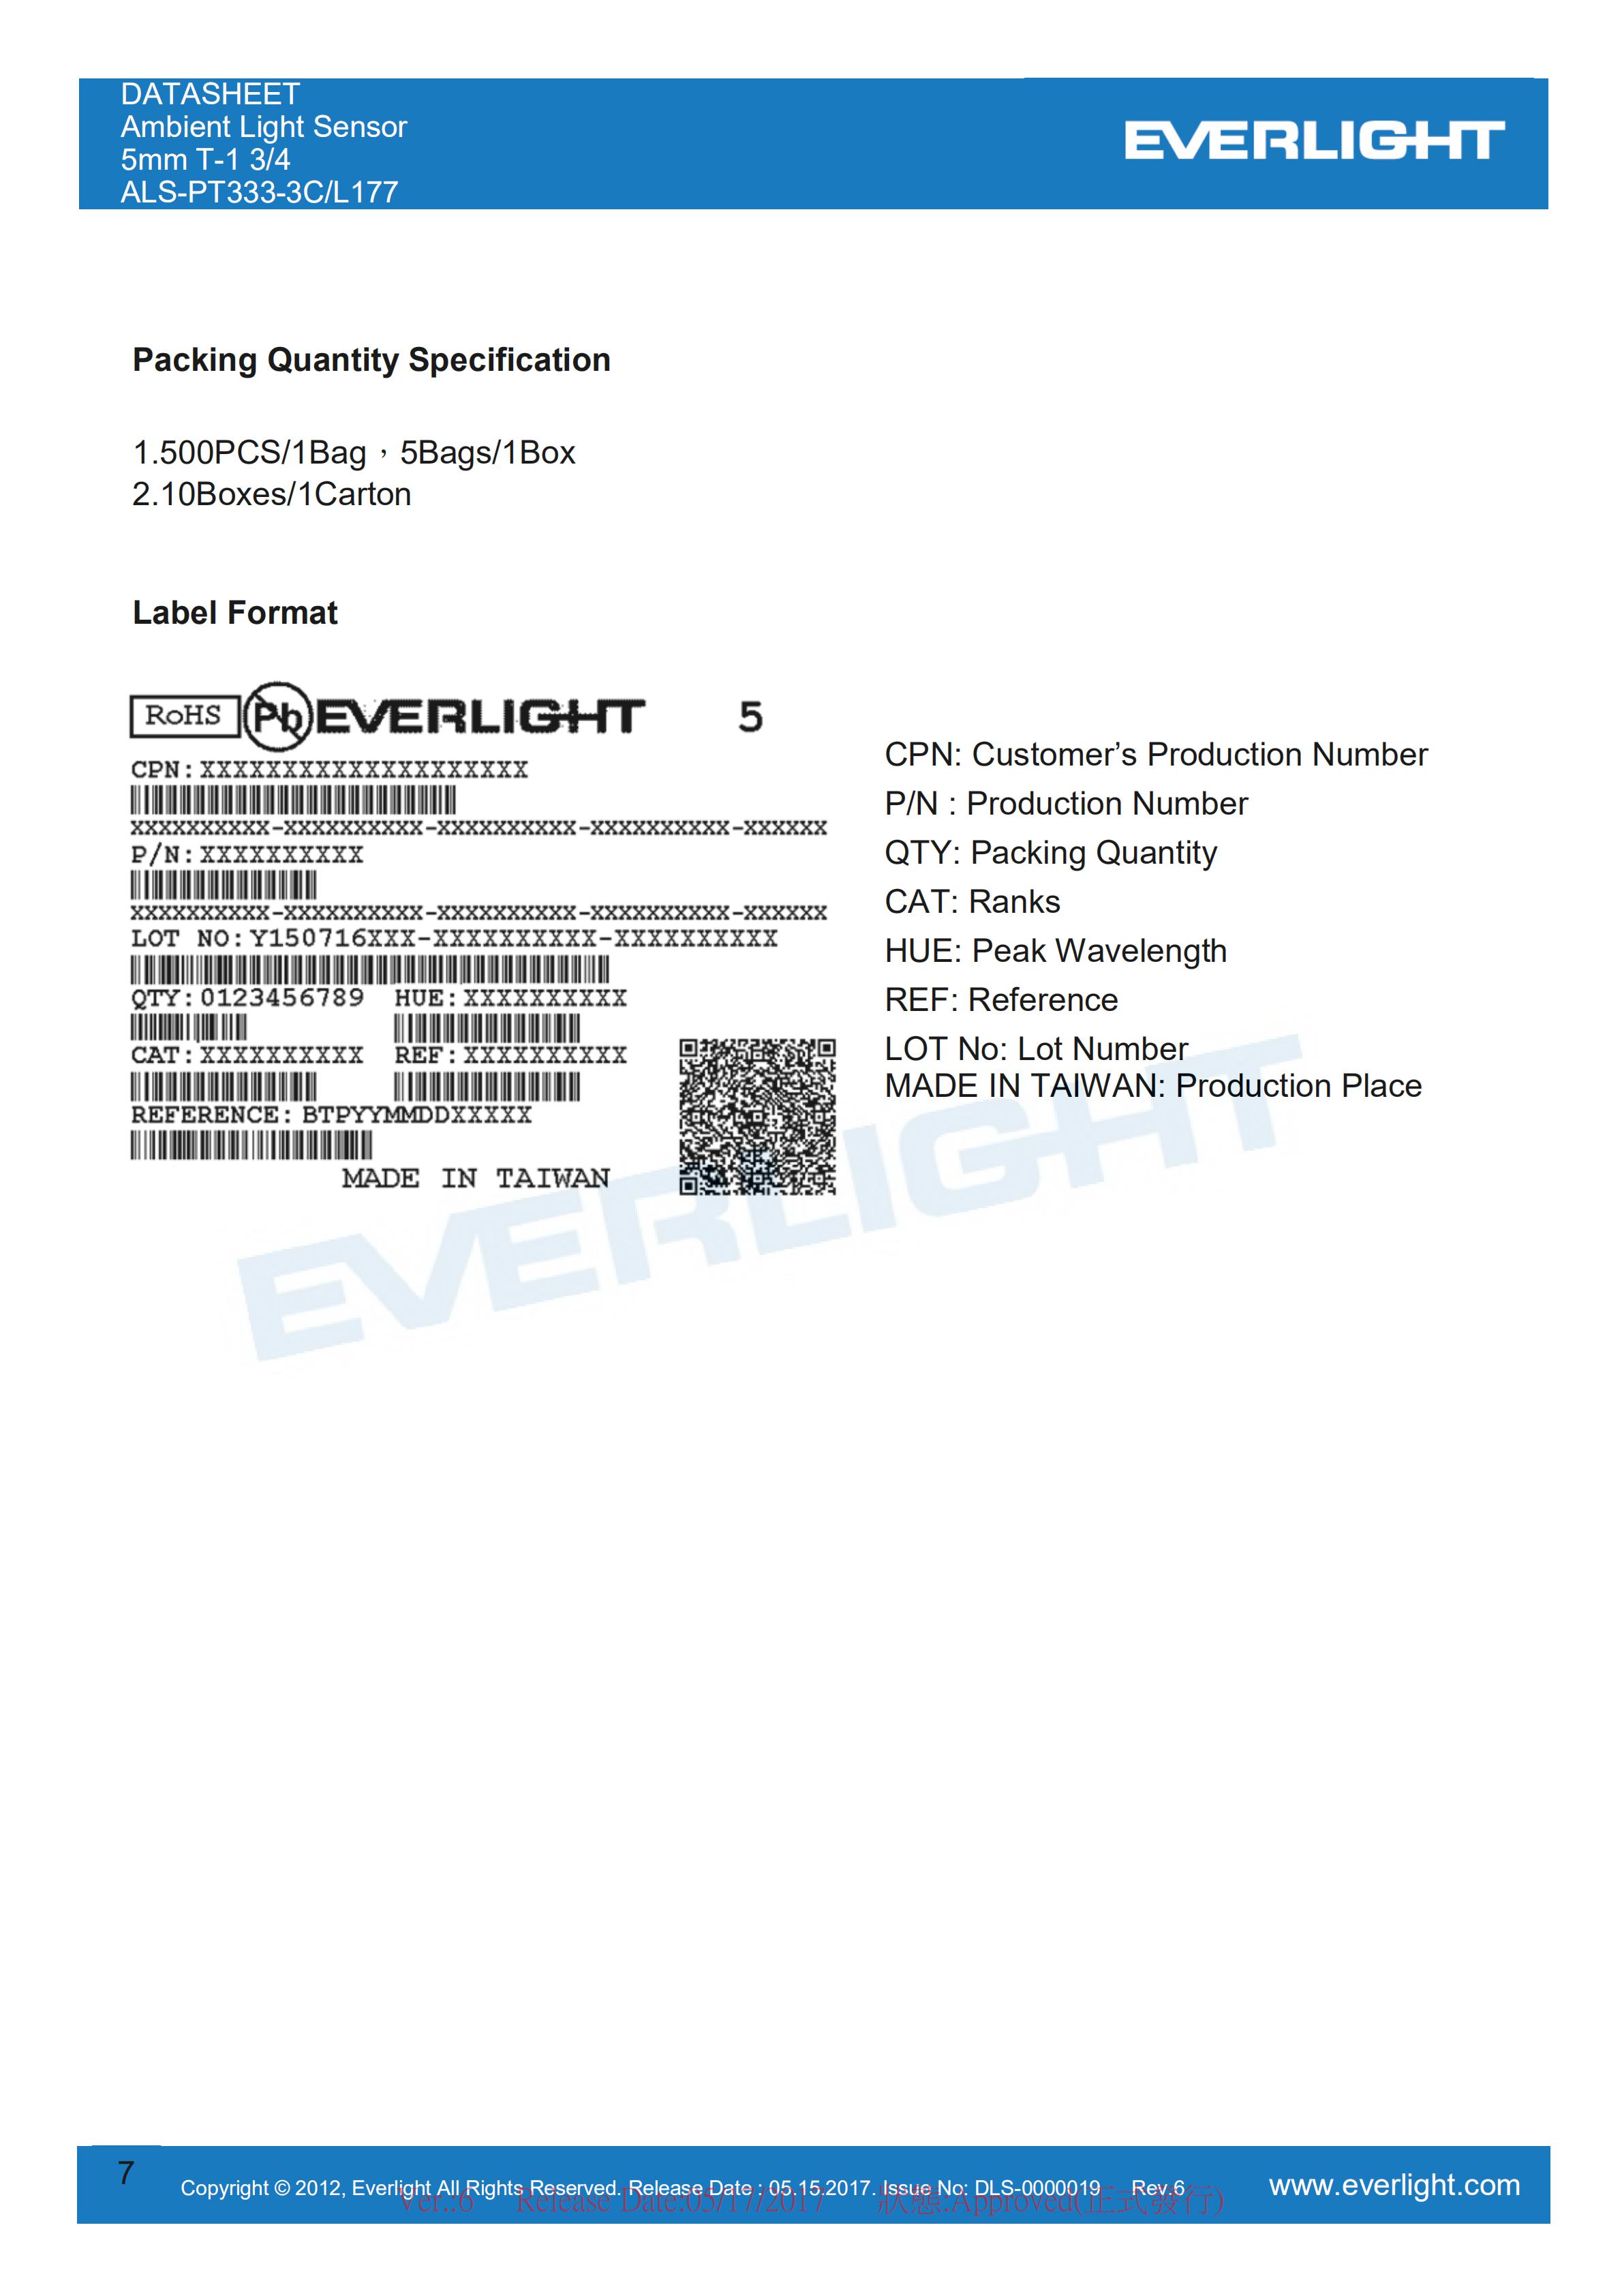 Everlight Ambient Light Sensor ALS-PT333-3C/L177 Datasheet